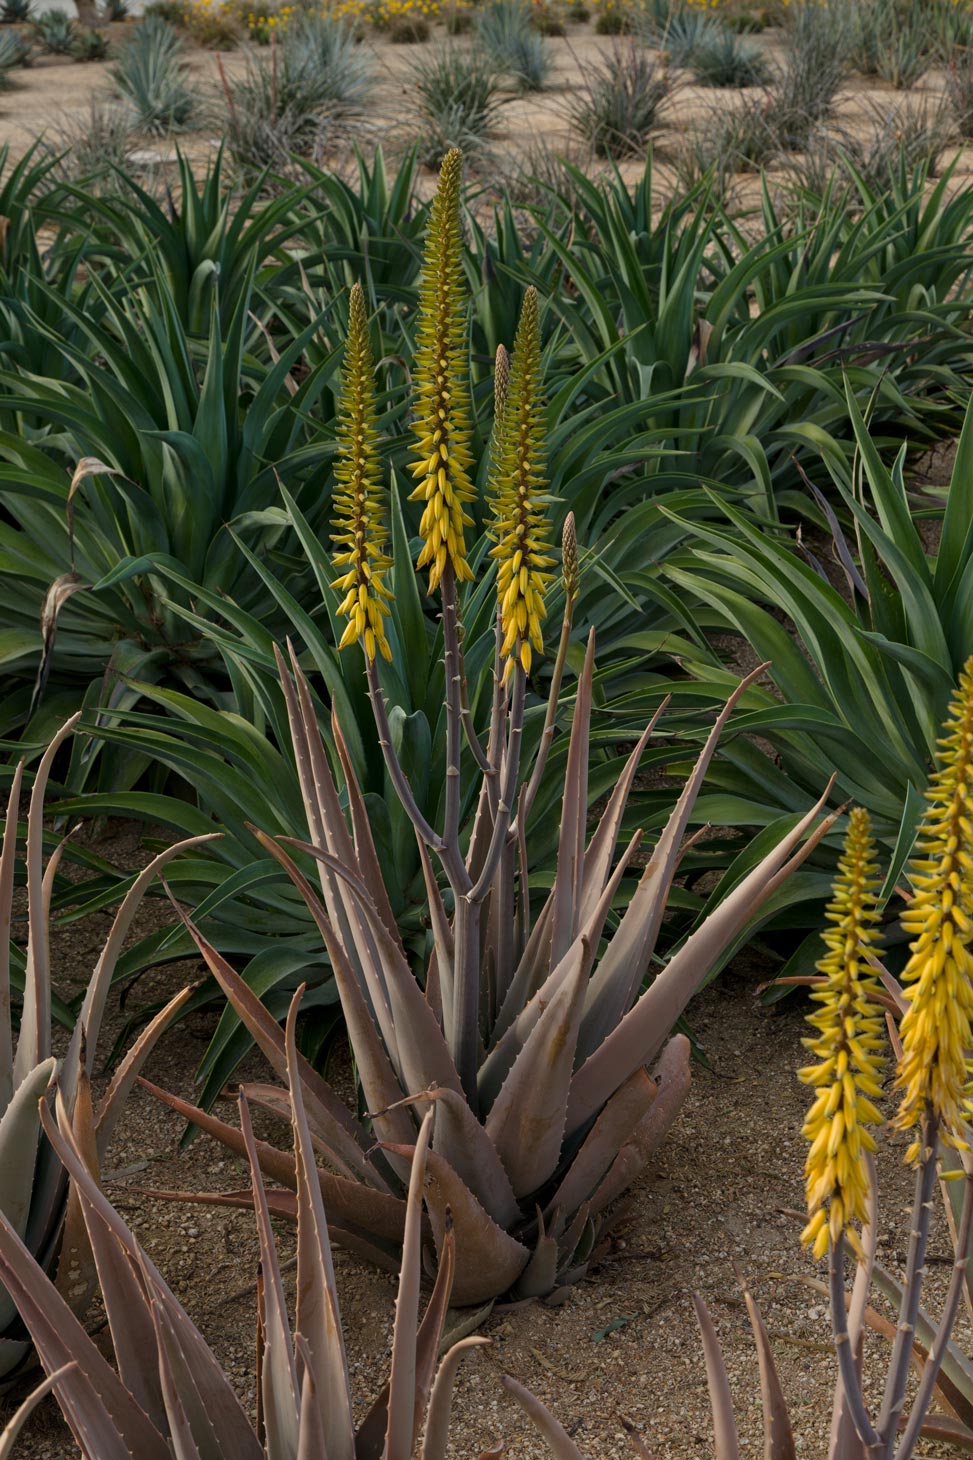 A singular Medicinal Aloe with a three-pronged stalk, blooming.